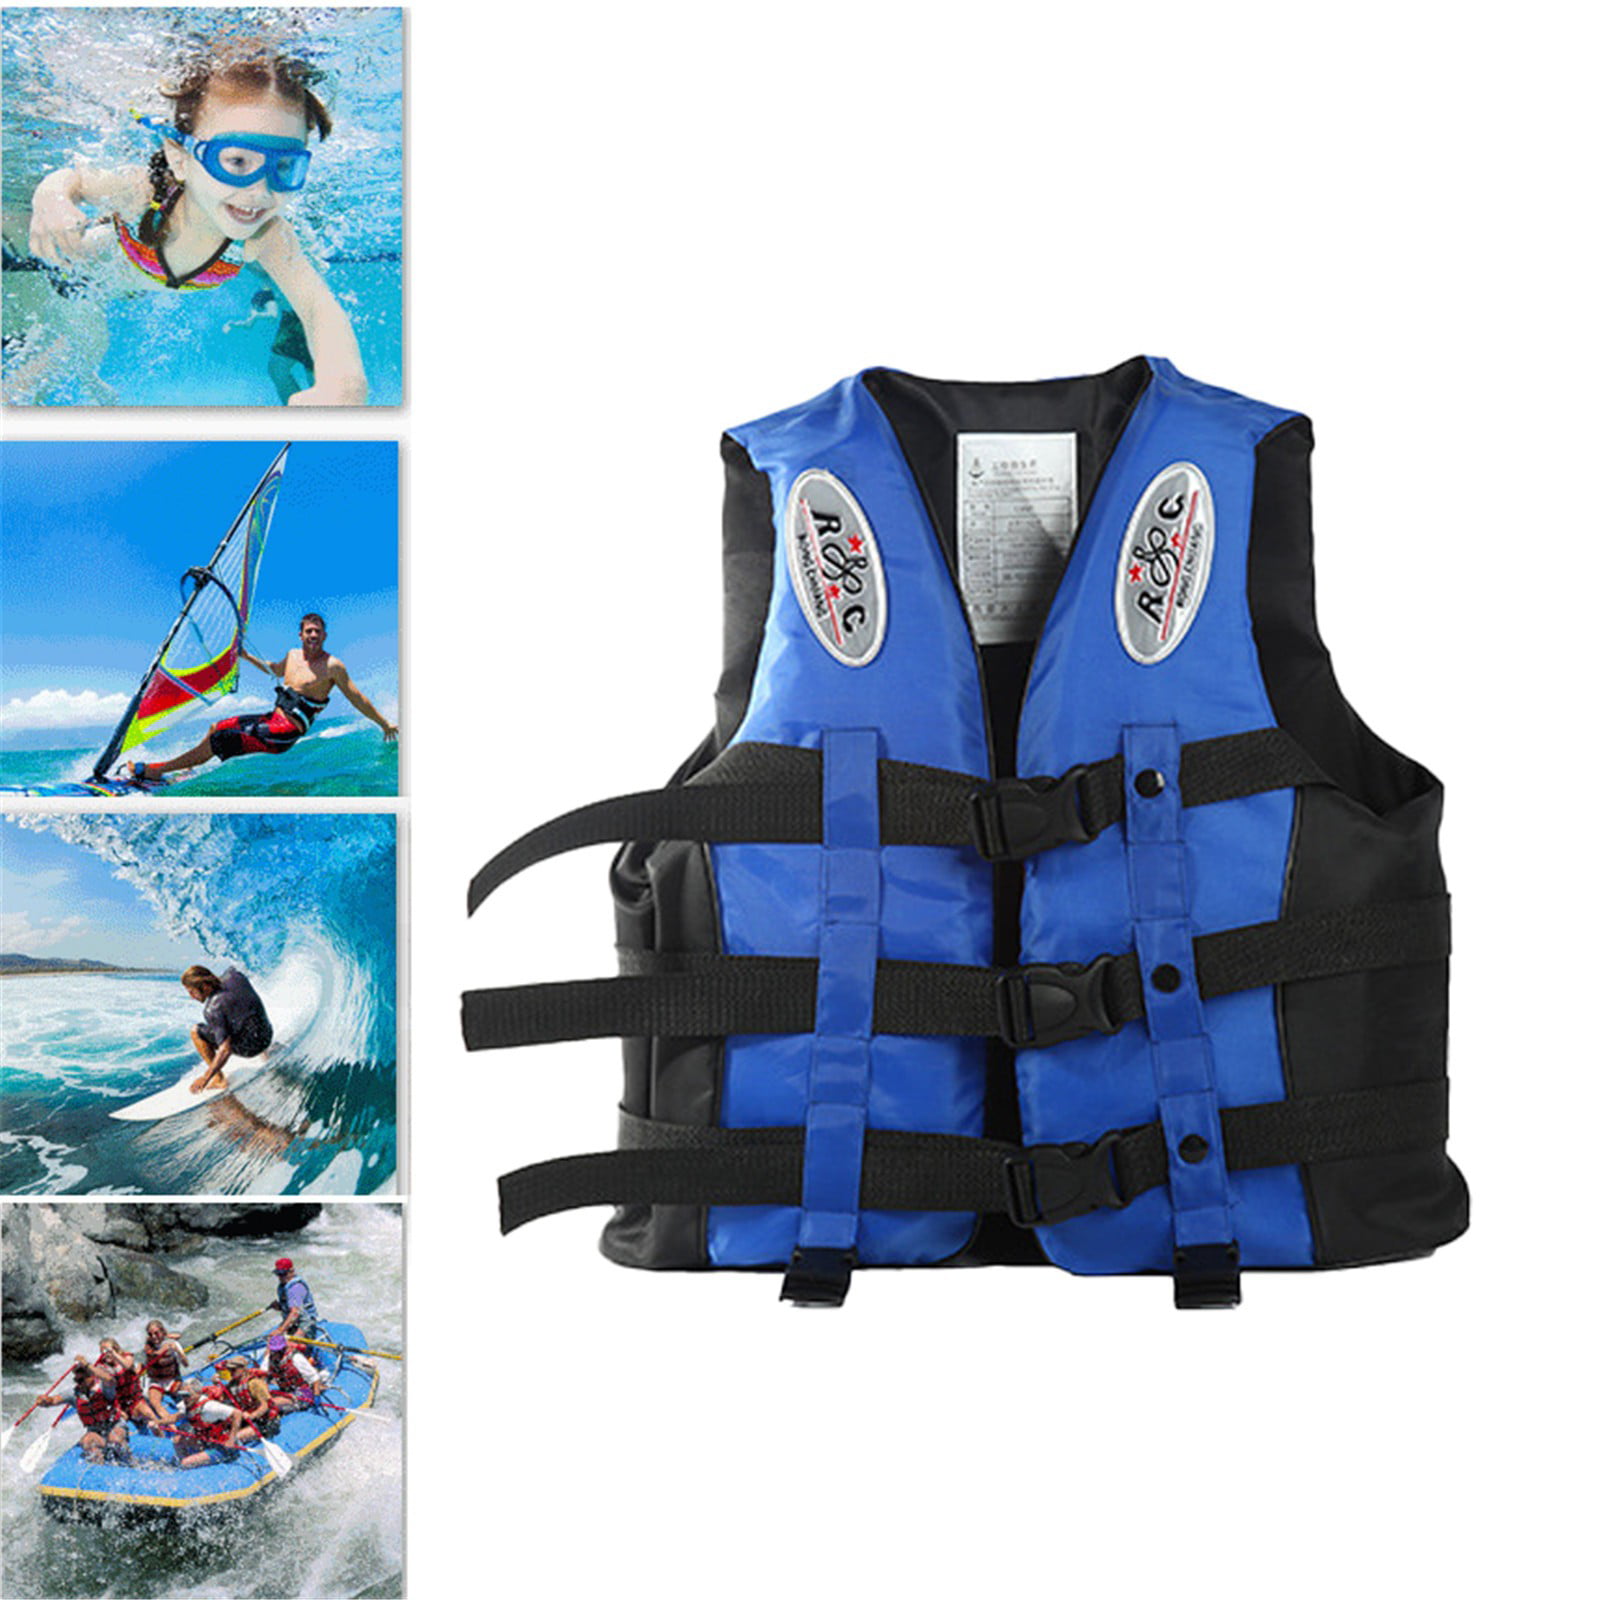 Adults Kids Life Watersport Vest Kayak Ski Buoyancy Aid Sailing Boating Jacket 